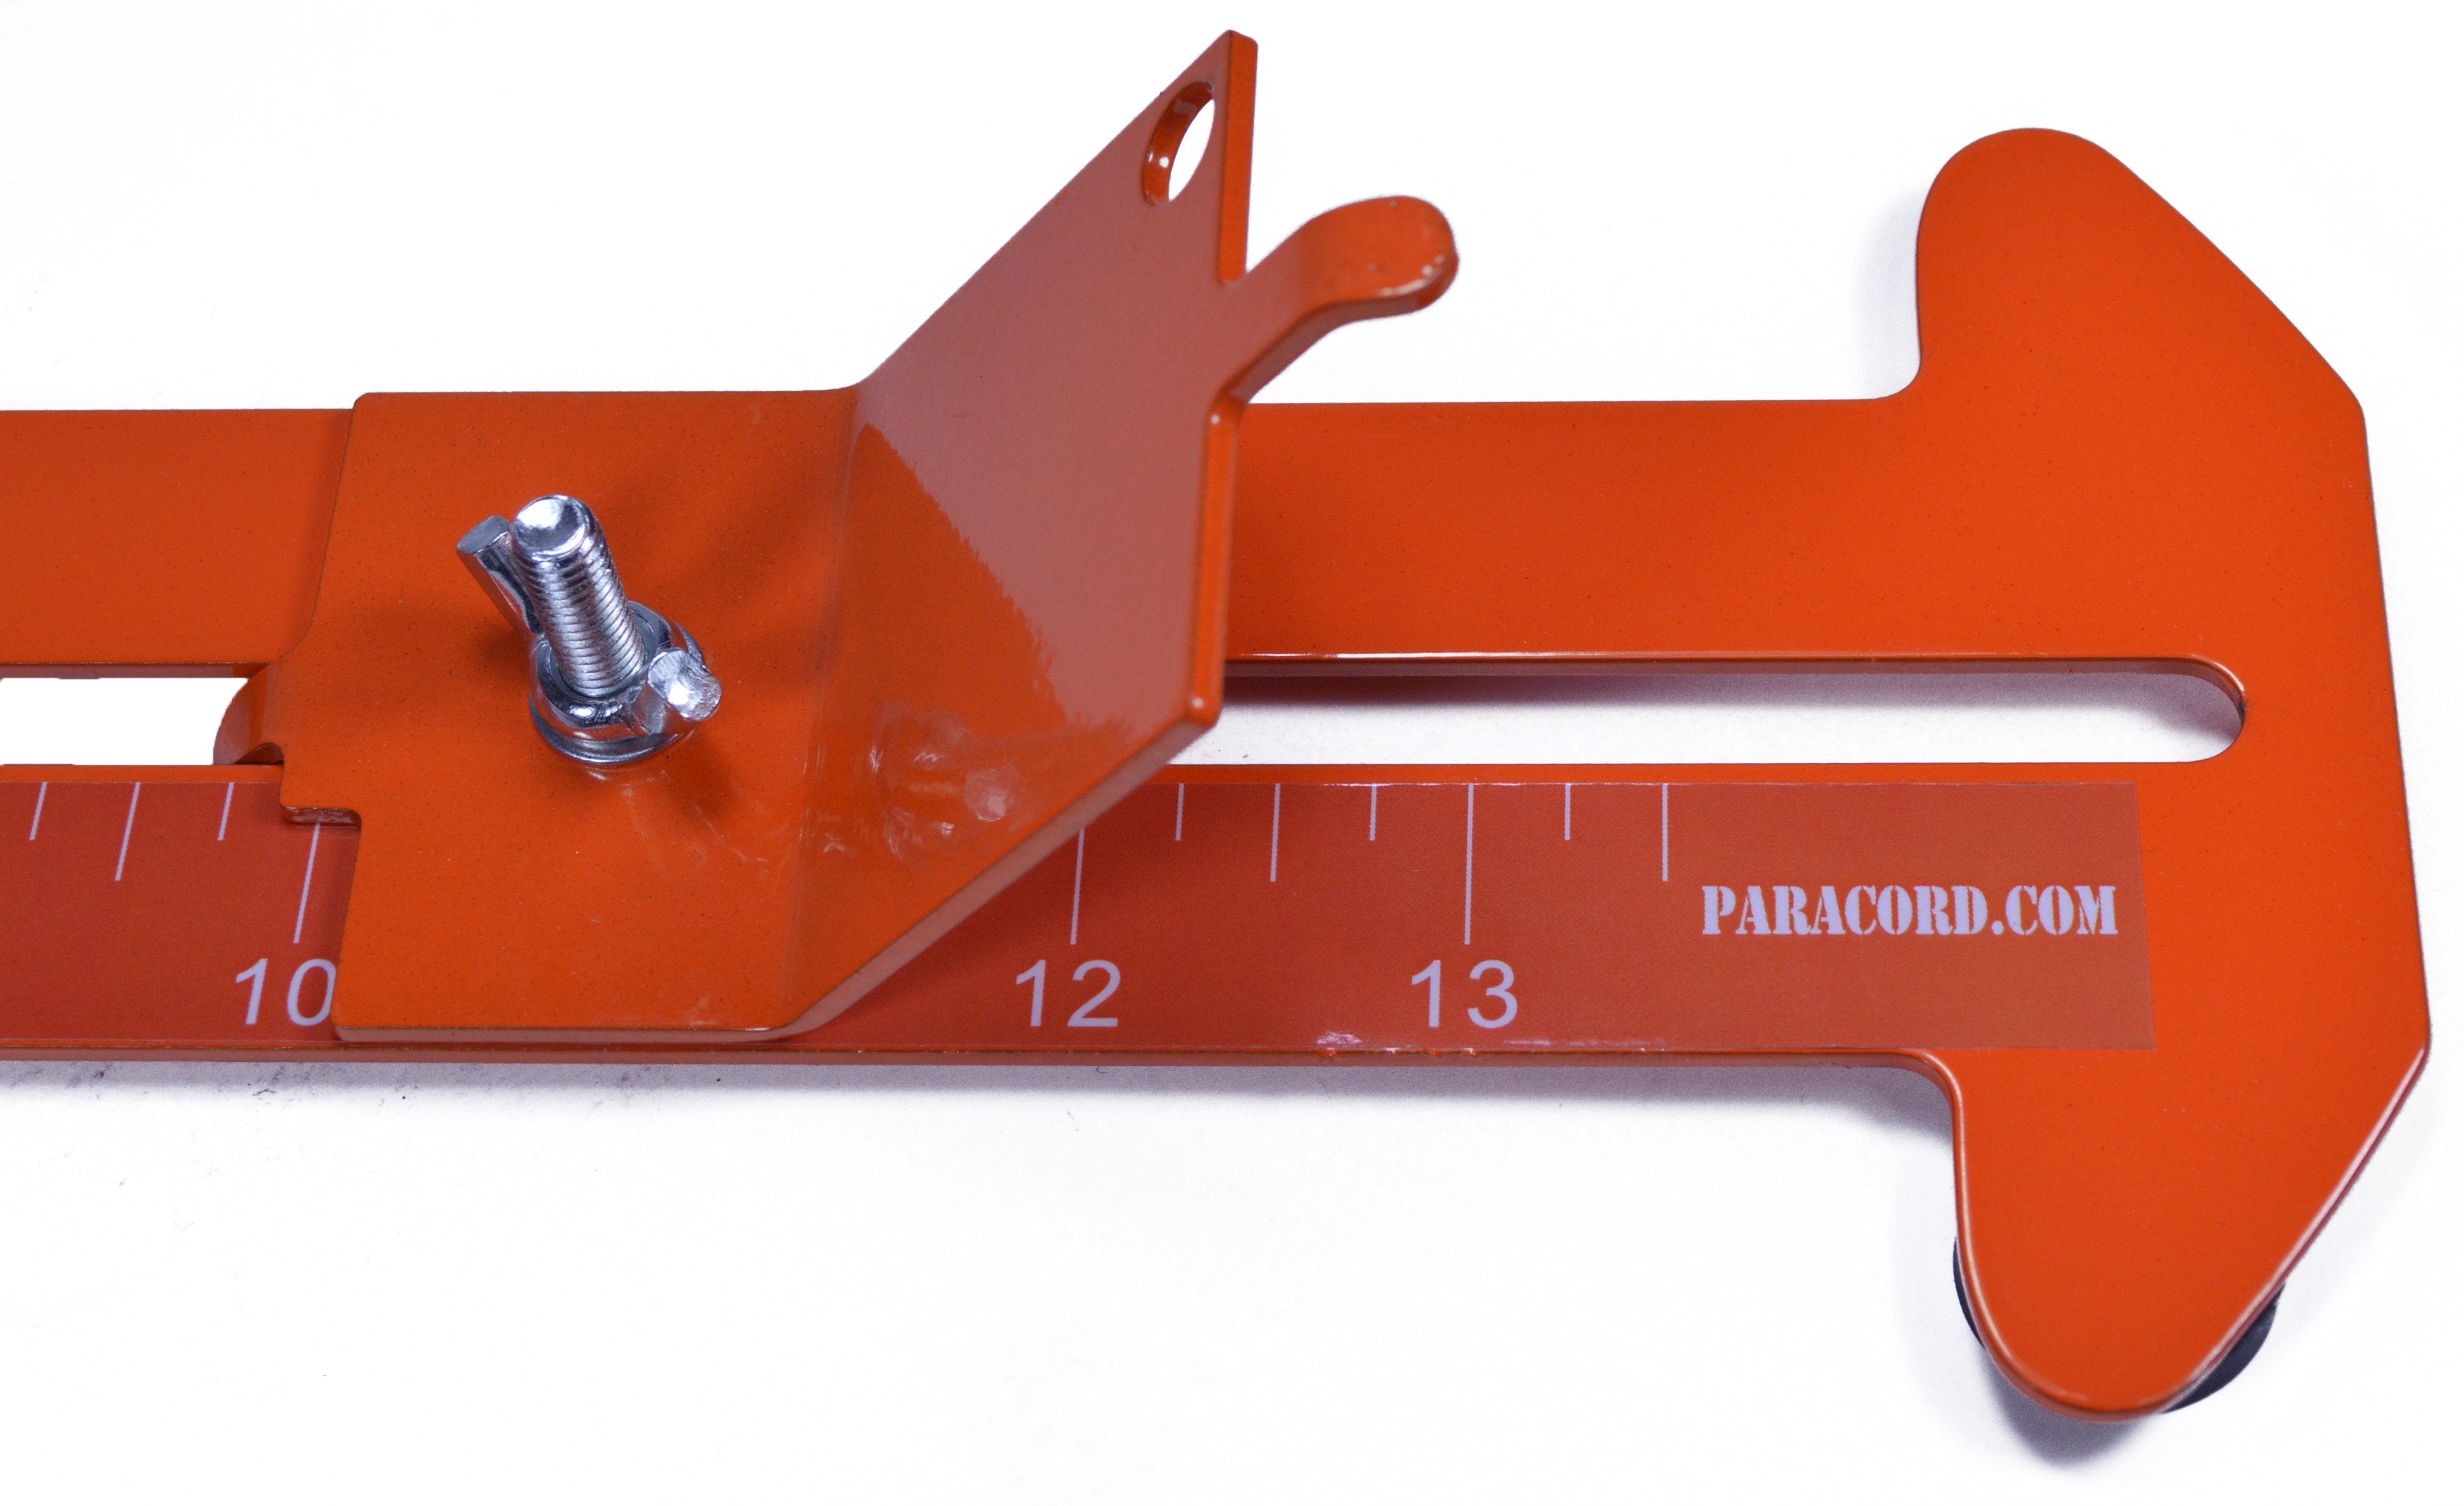 New Monkey Fist Jig and Paracord Jig Bracelet Maker Paracord Tool Kit  Adjustable Metal Weaving DIY